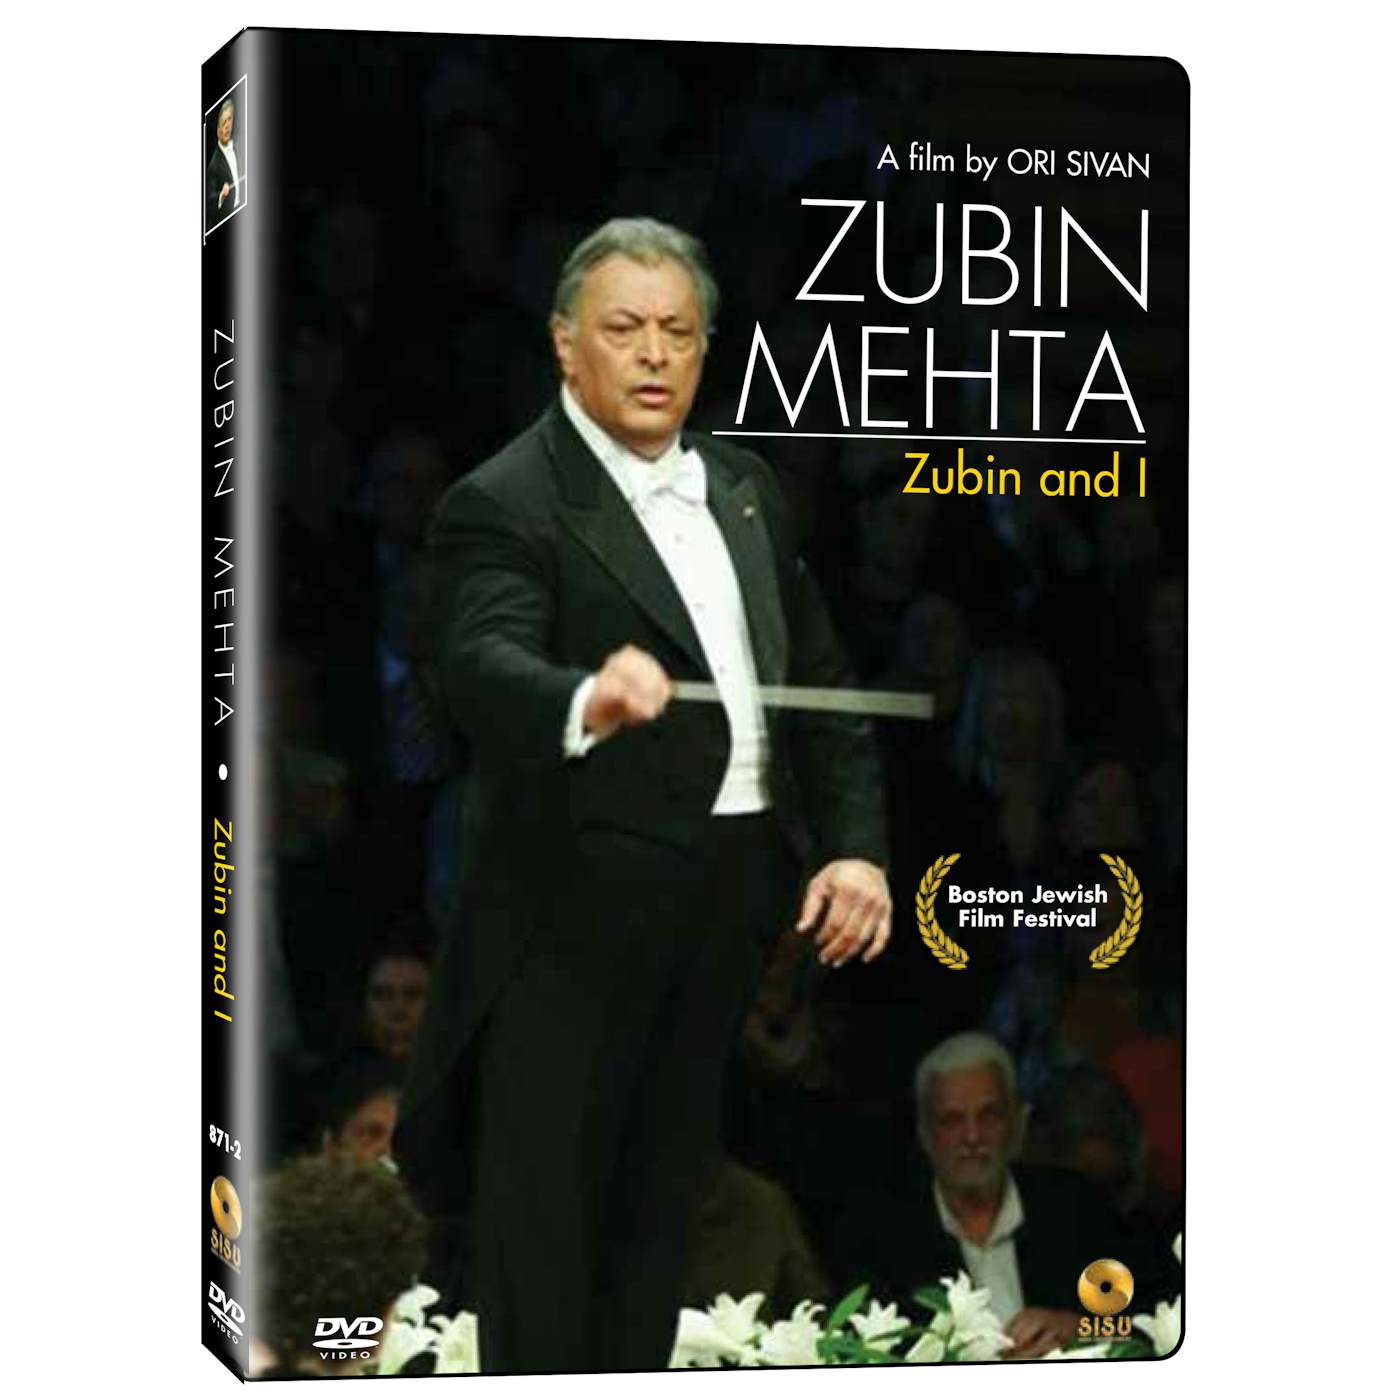 ZUBIN MEHTA DVD